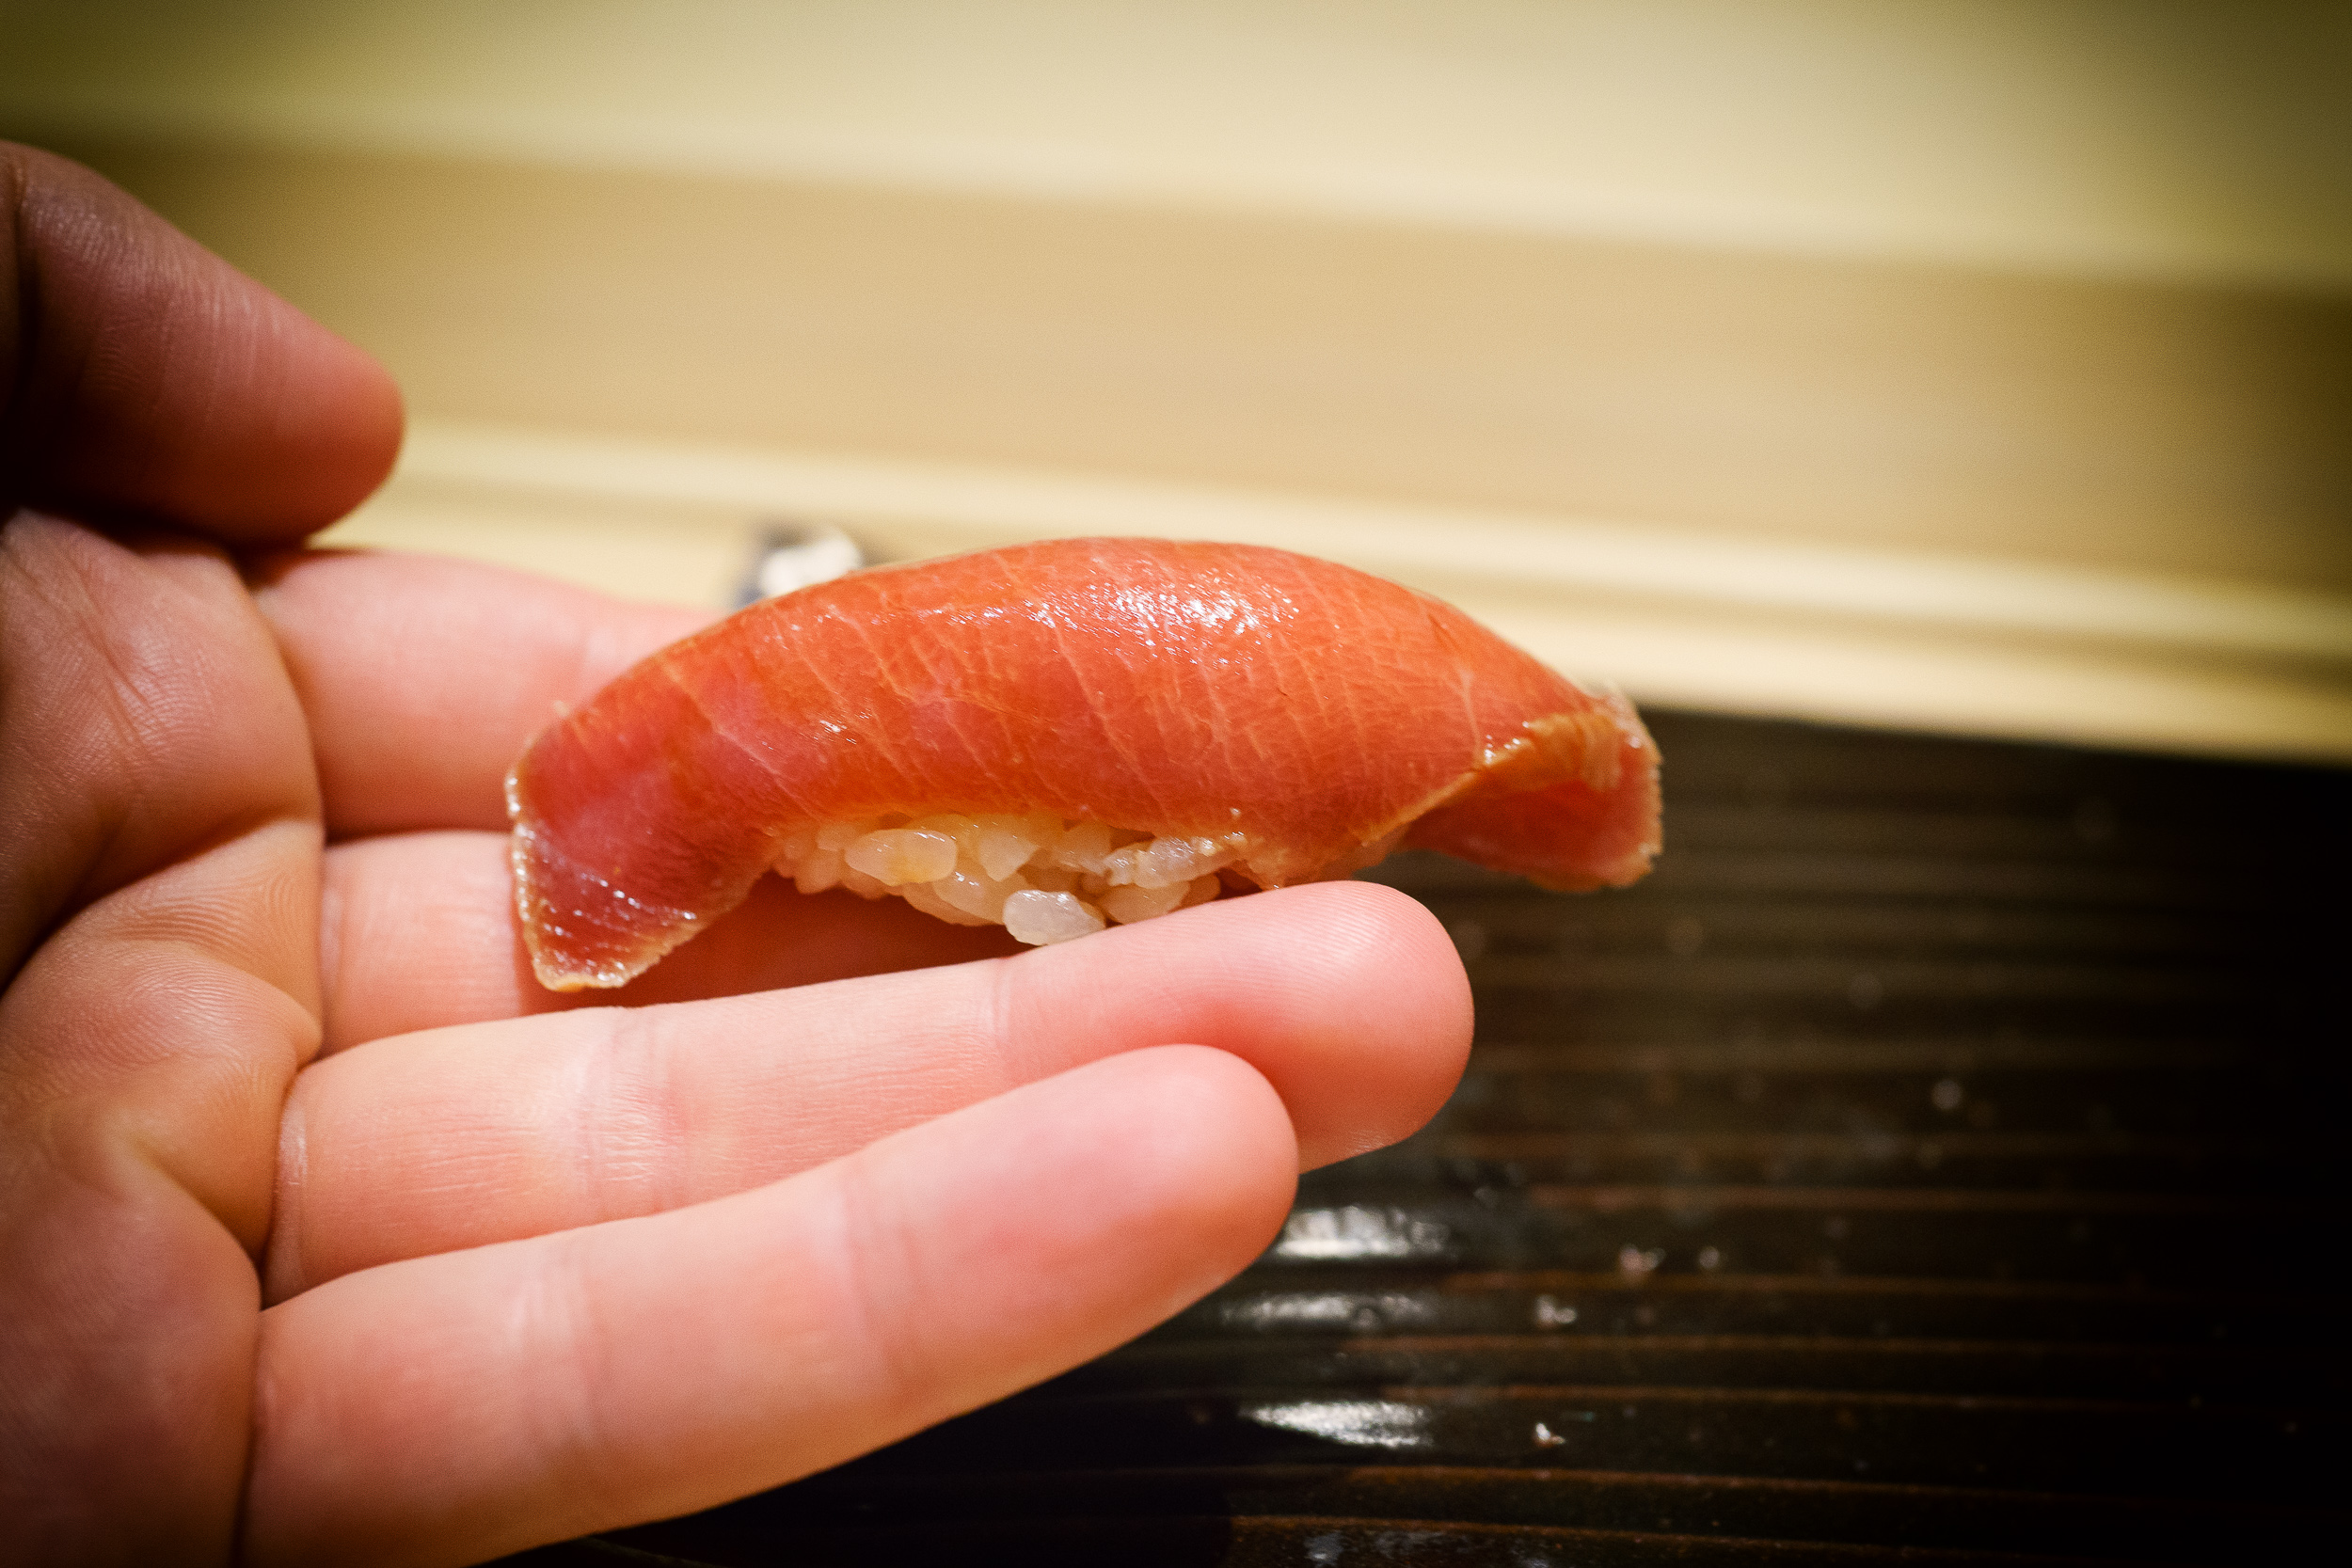 10th Course: Chuo toro (medium fatty tuna)